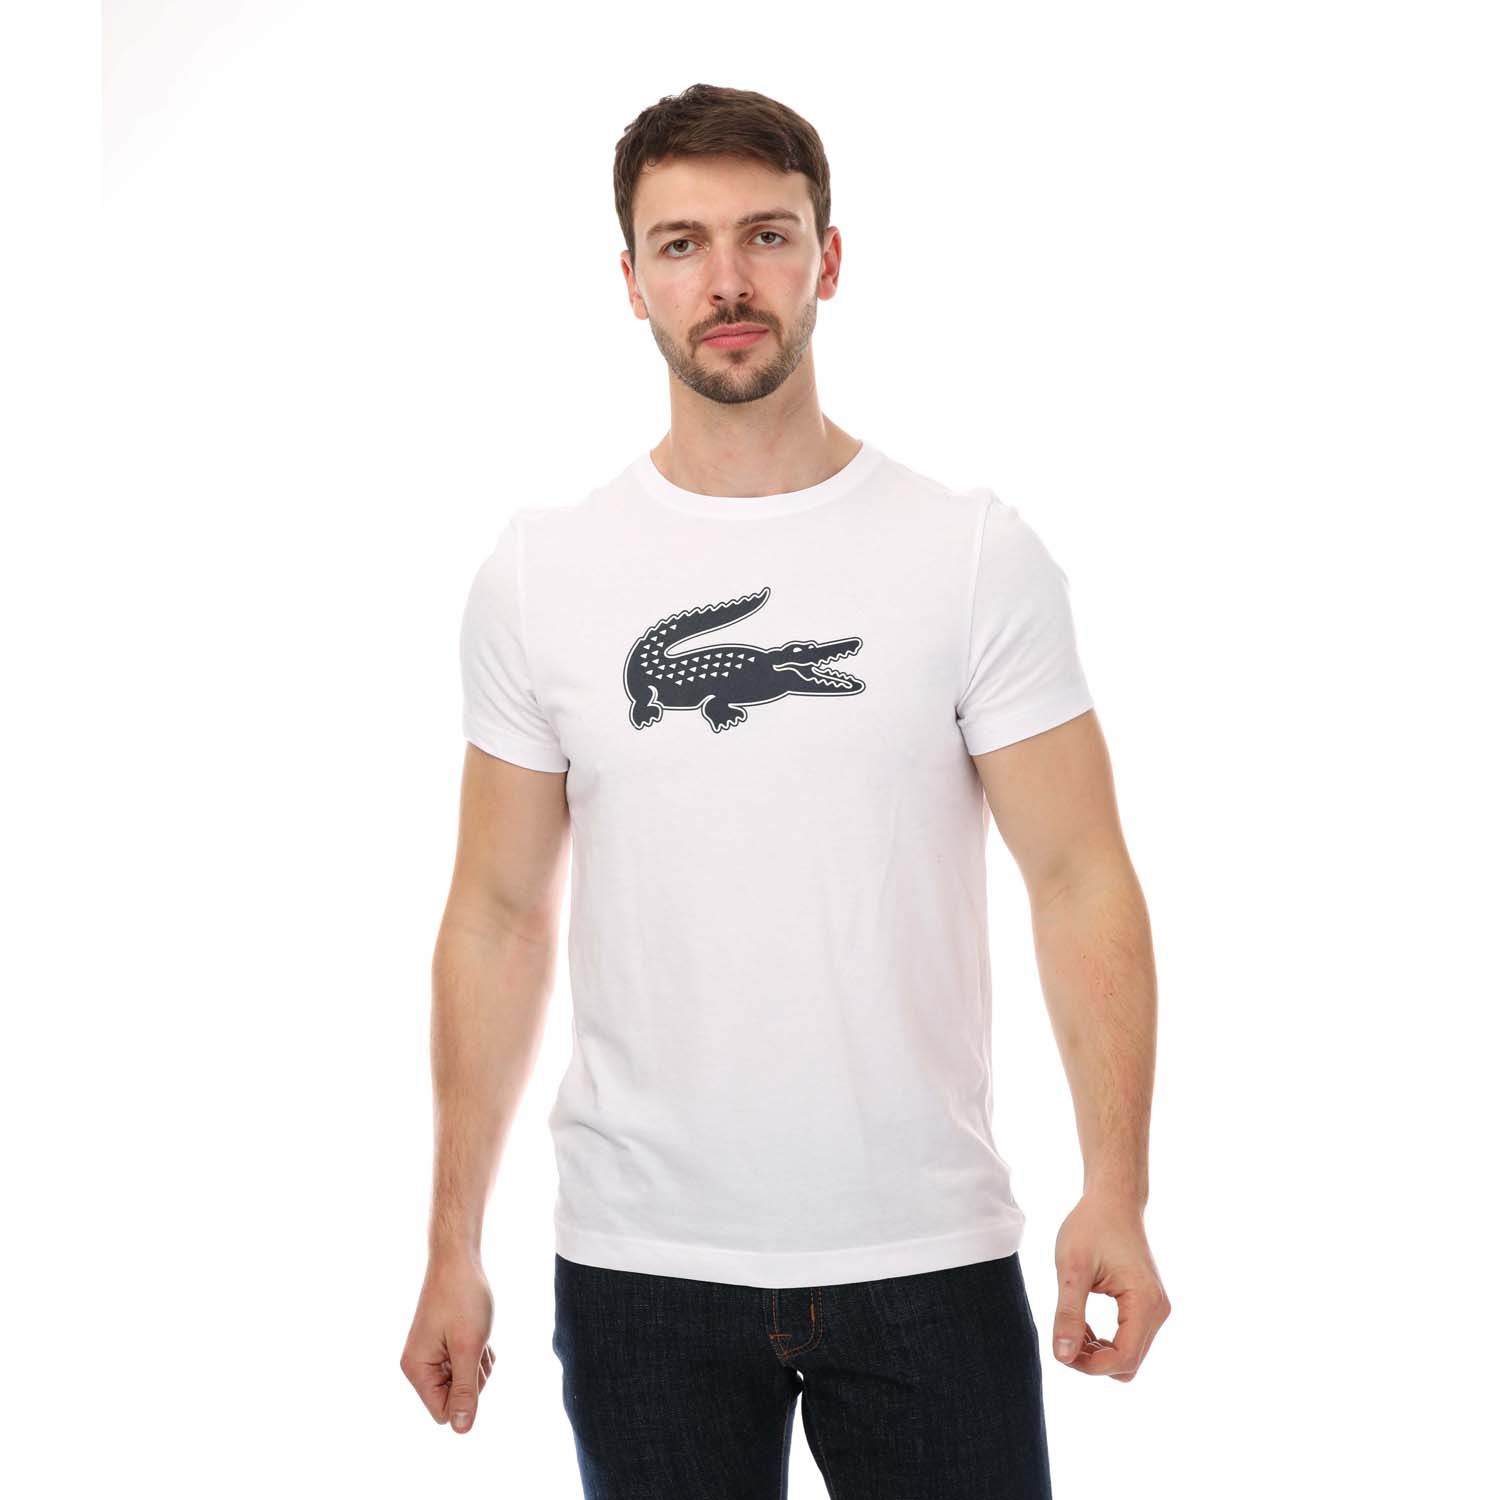 Mens SPORT 3D Print Crocodile Jersey T-Shirt